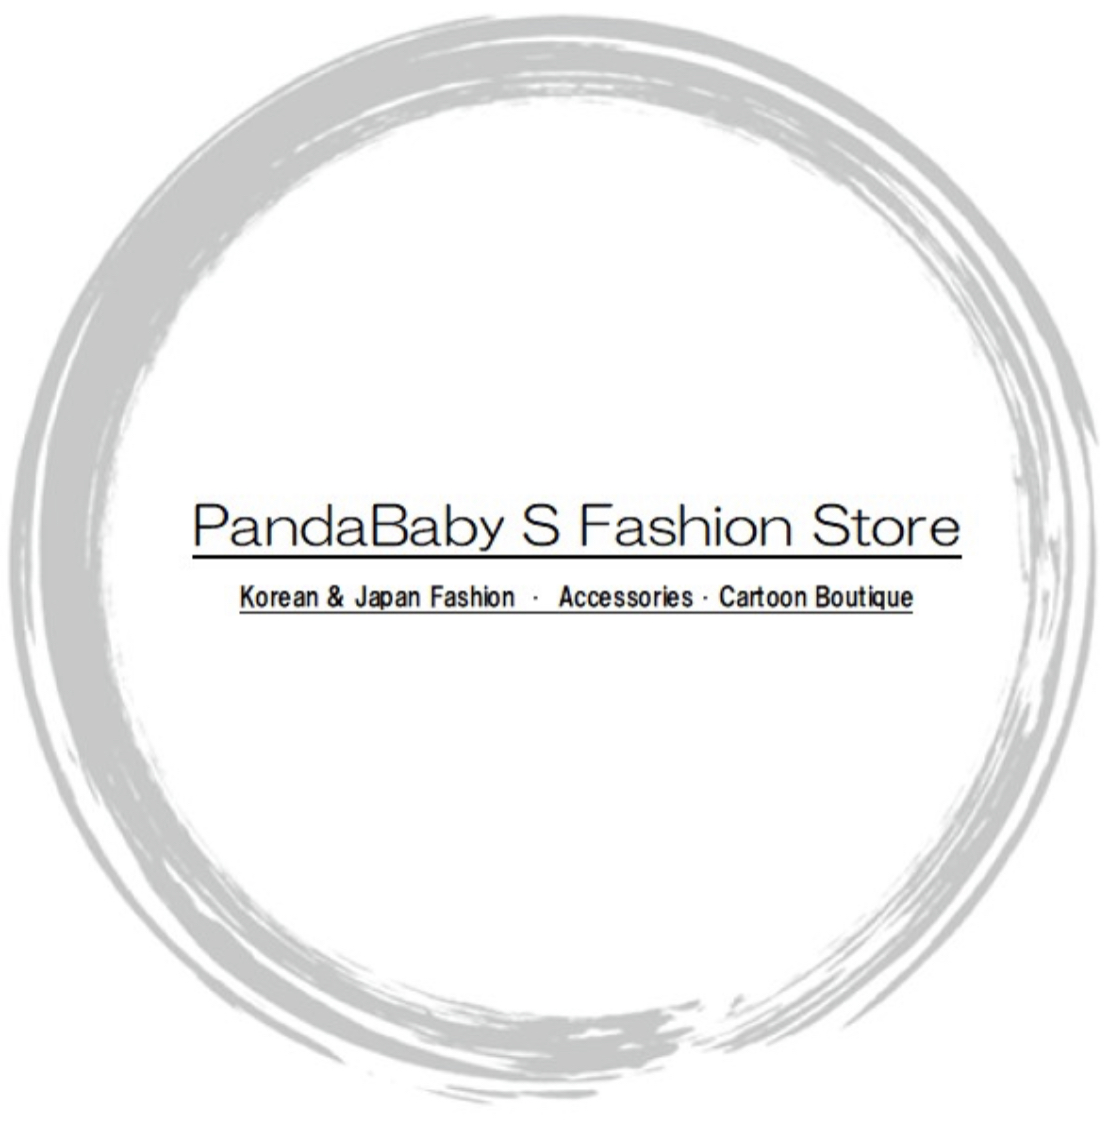 PandaBaby S Fashion Shop